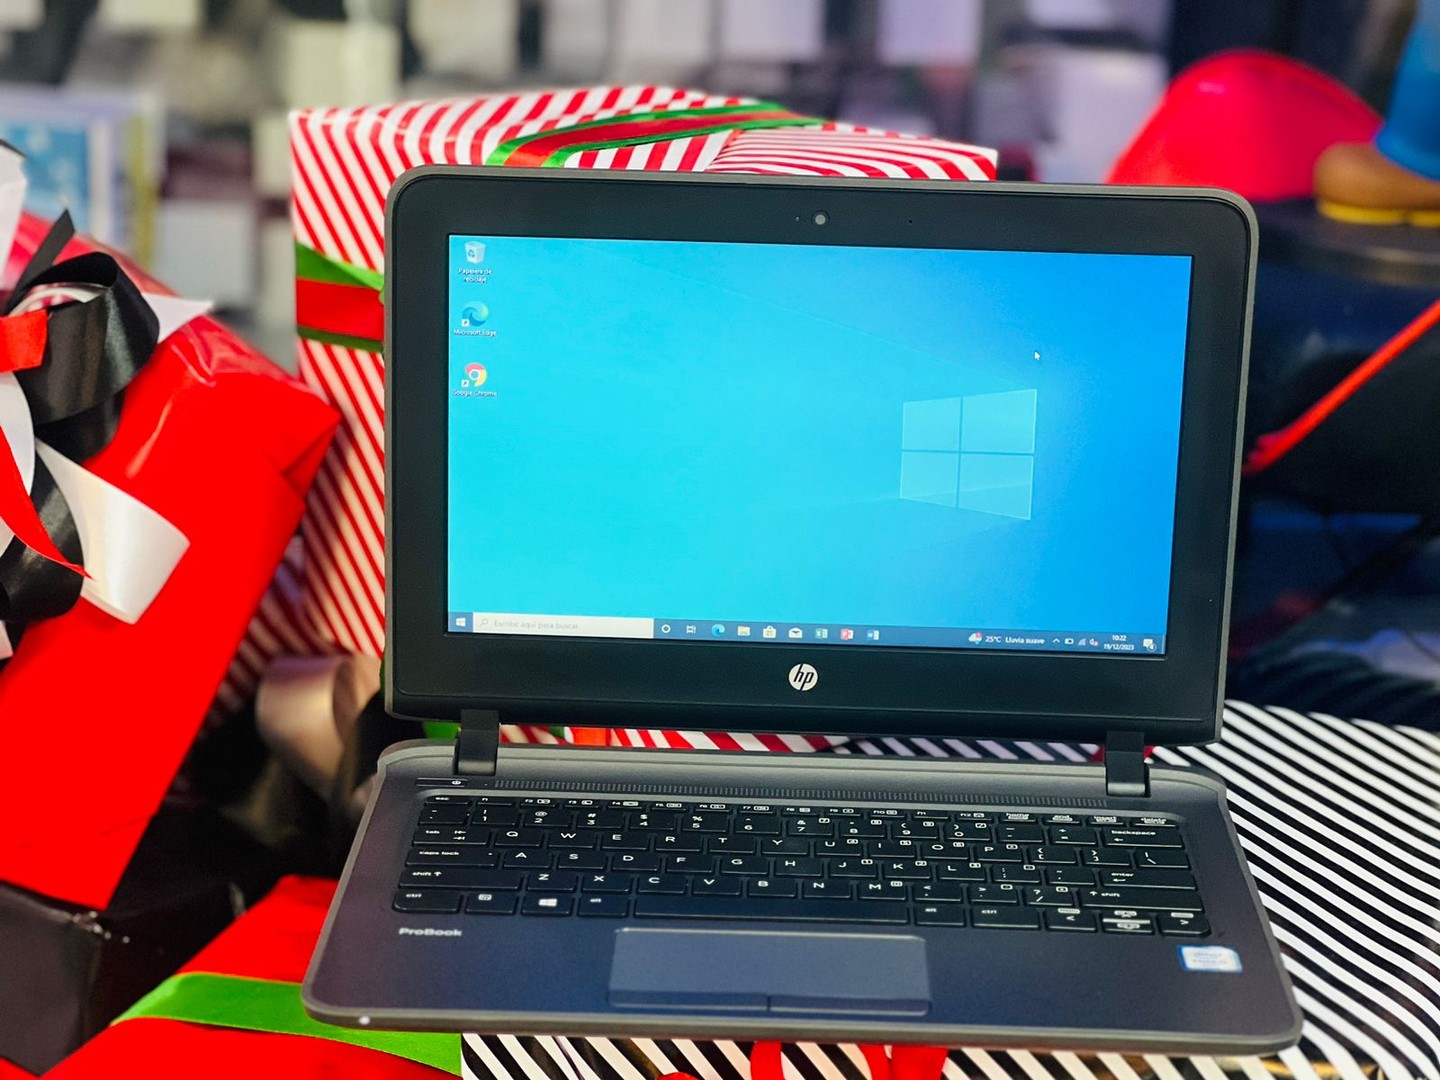 computadoras y laptops - Hermosa Laptop HP i3 6ta gen 128 GB SSD, incluye garantia.  0